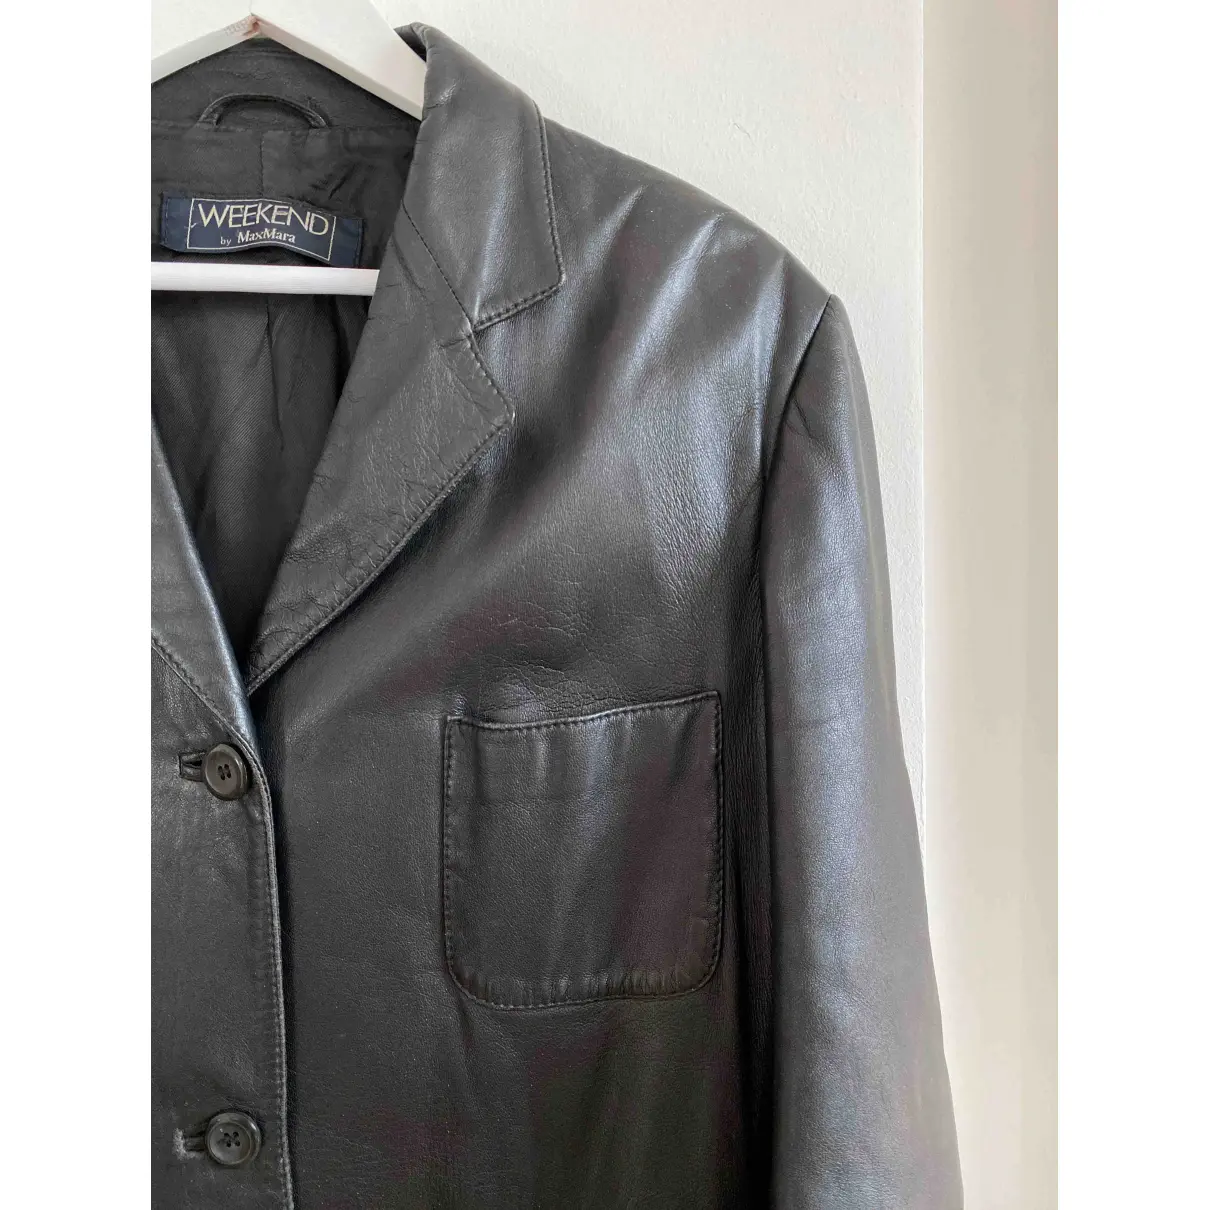 Leather blazer Max Mara Weekend - Vintage